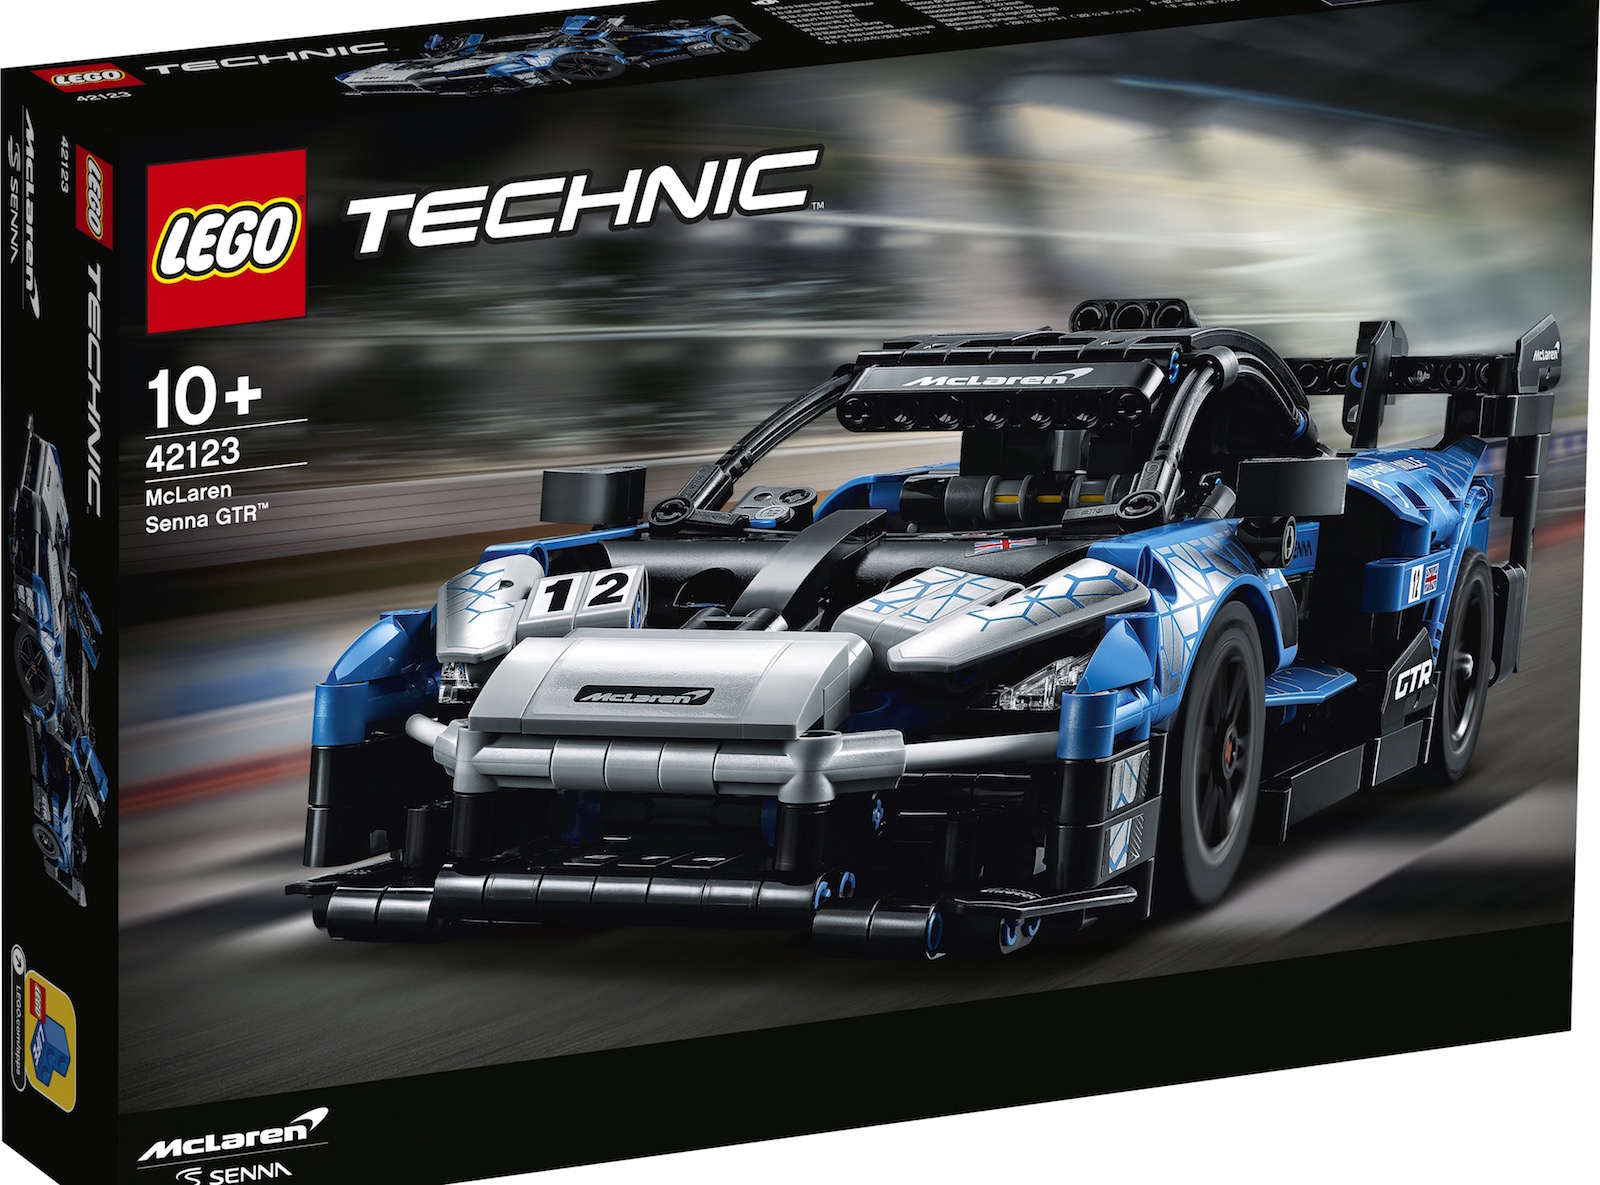 Lego Technic announces McLaren Senna GTR built set